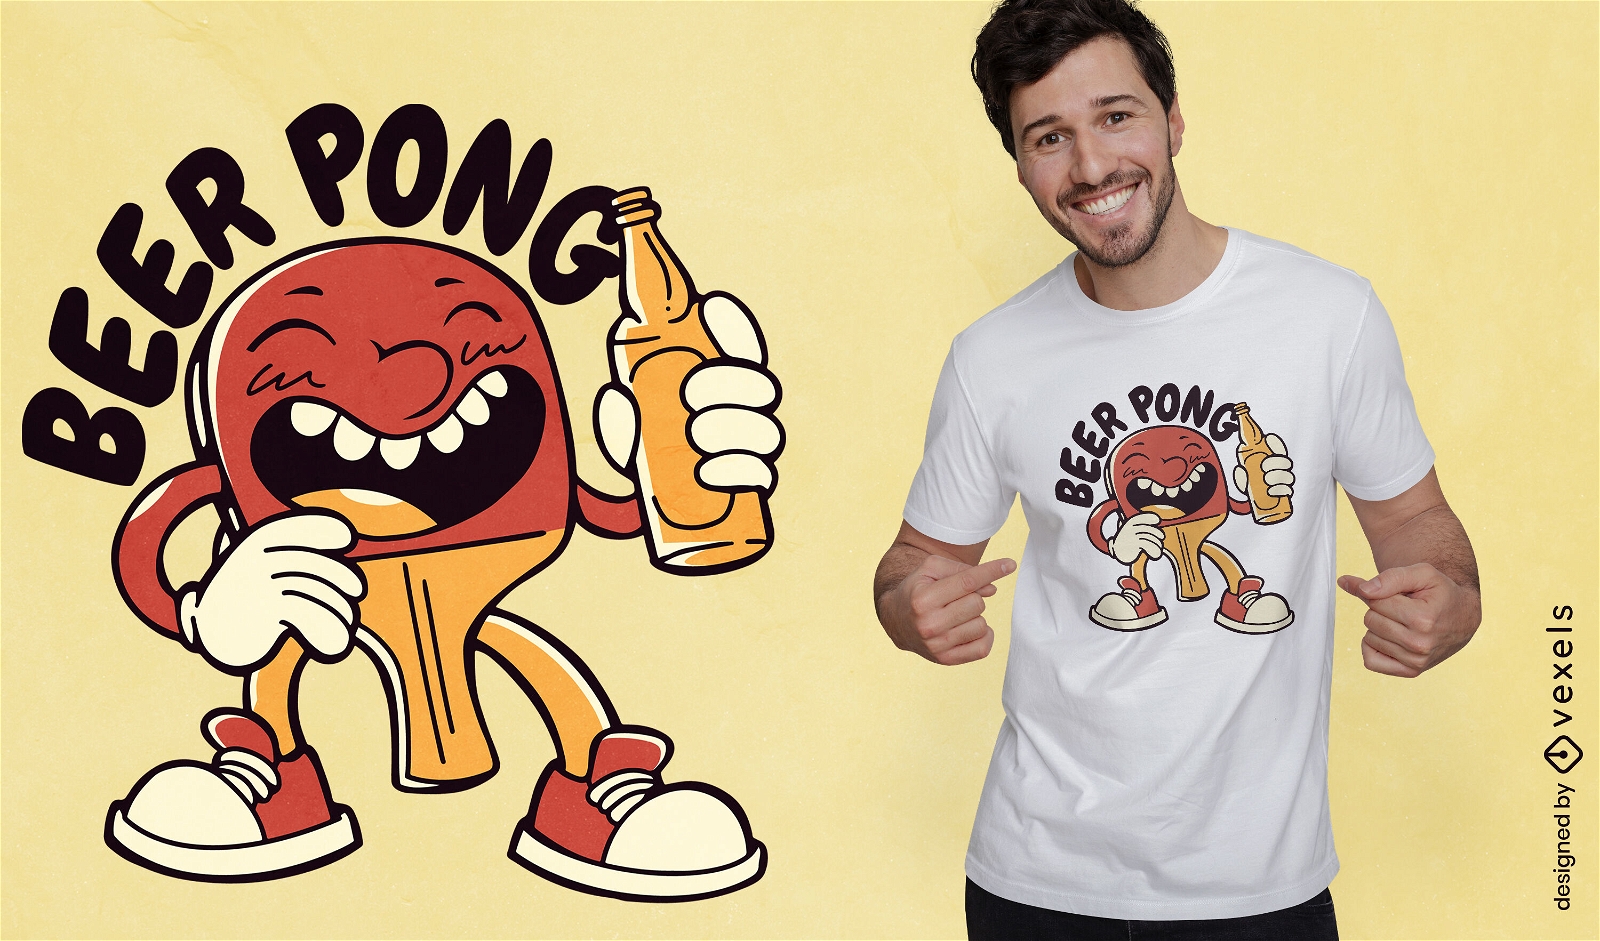 Beer pong cartoon character t-shirt design